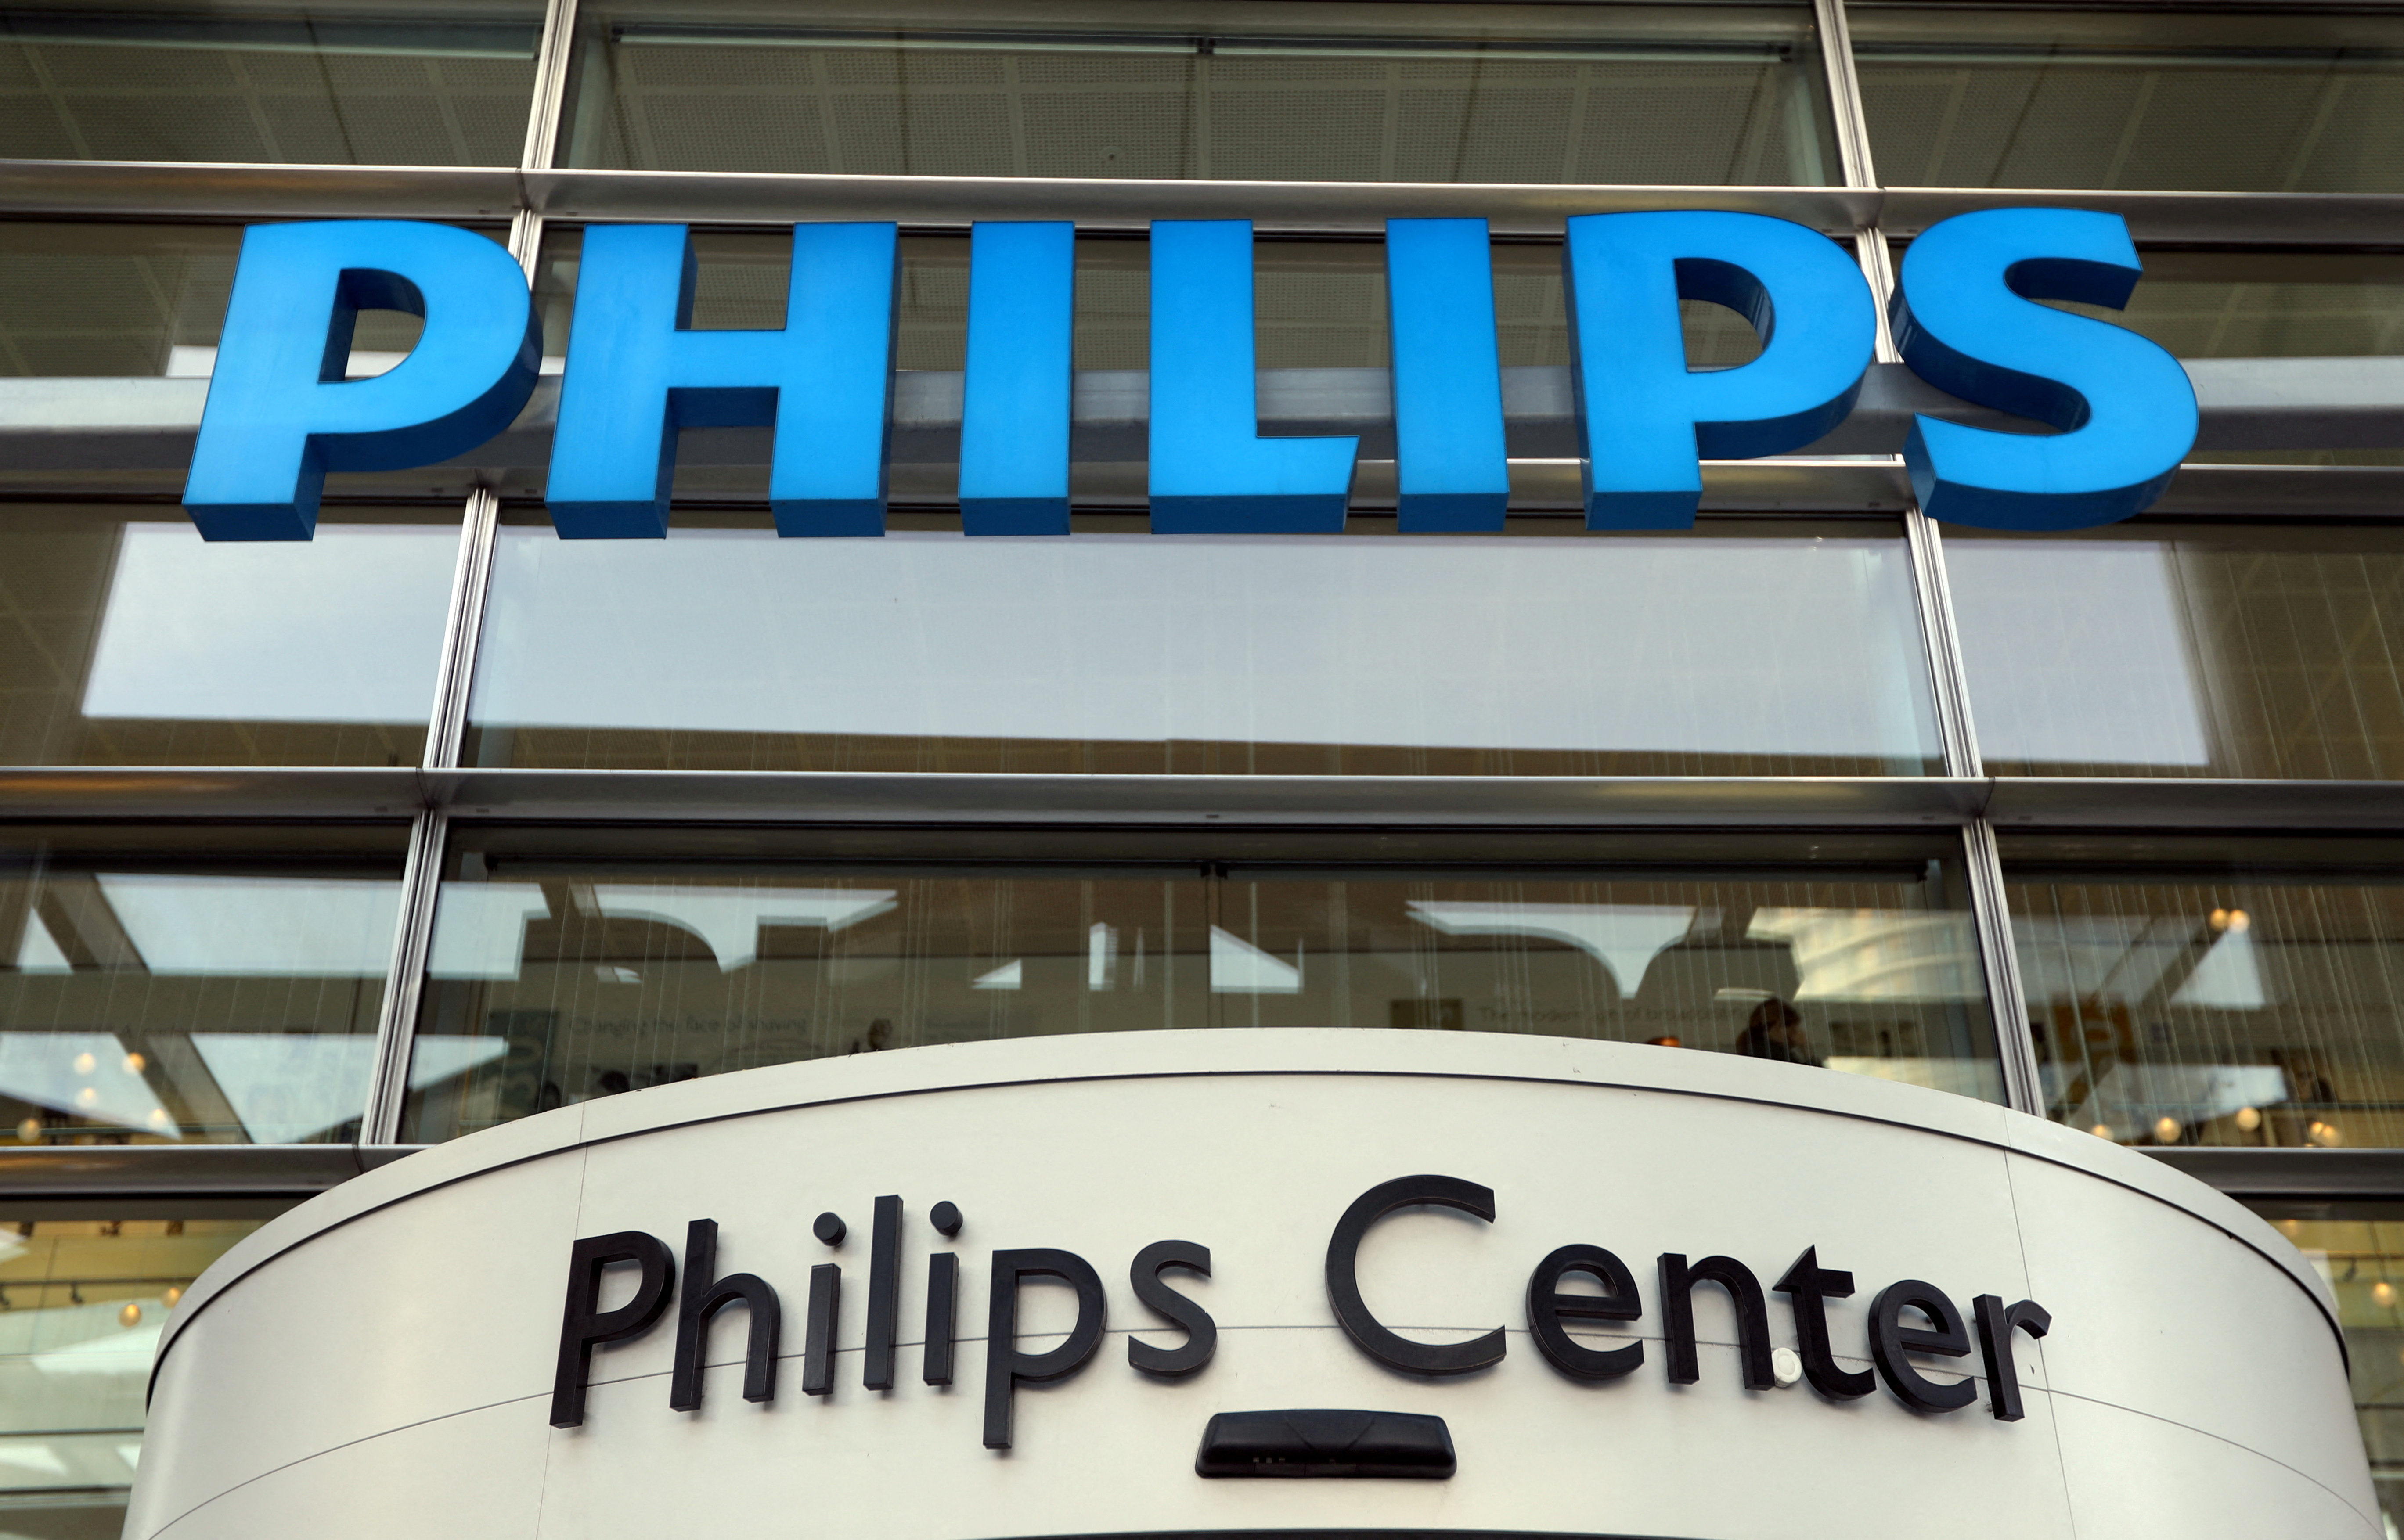 Dutch health technology company Philips' Amsterdam headquarters